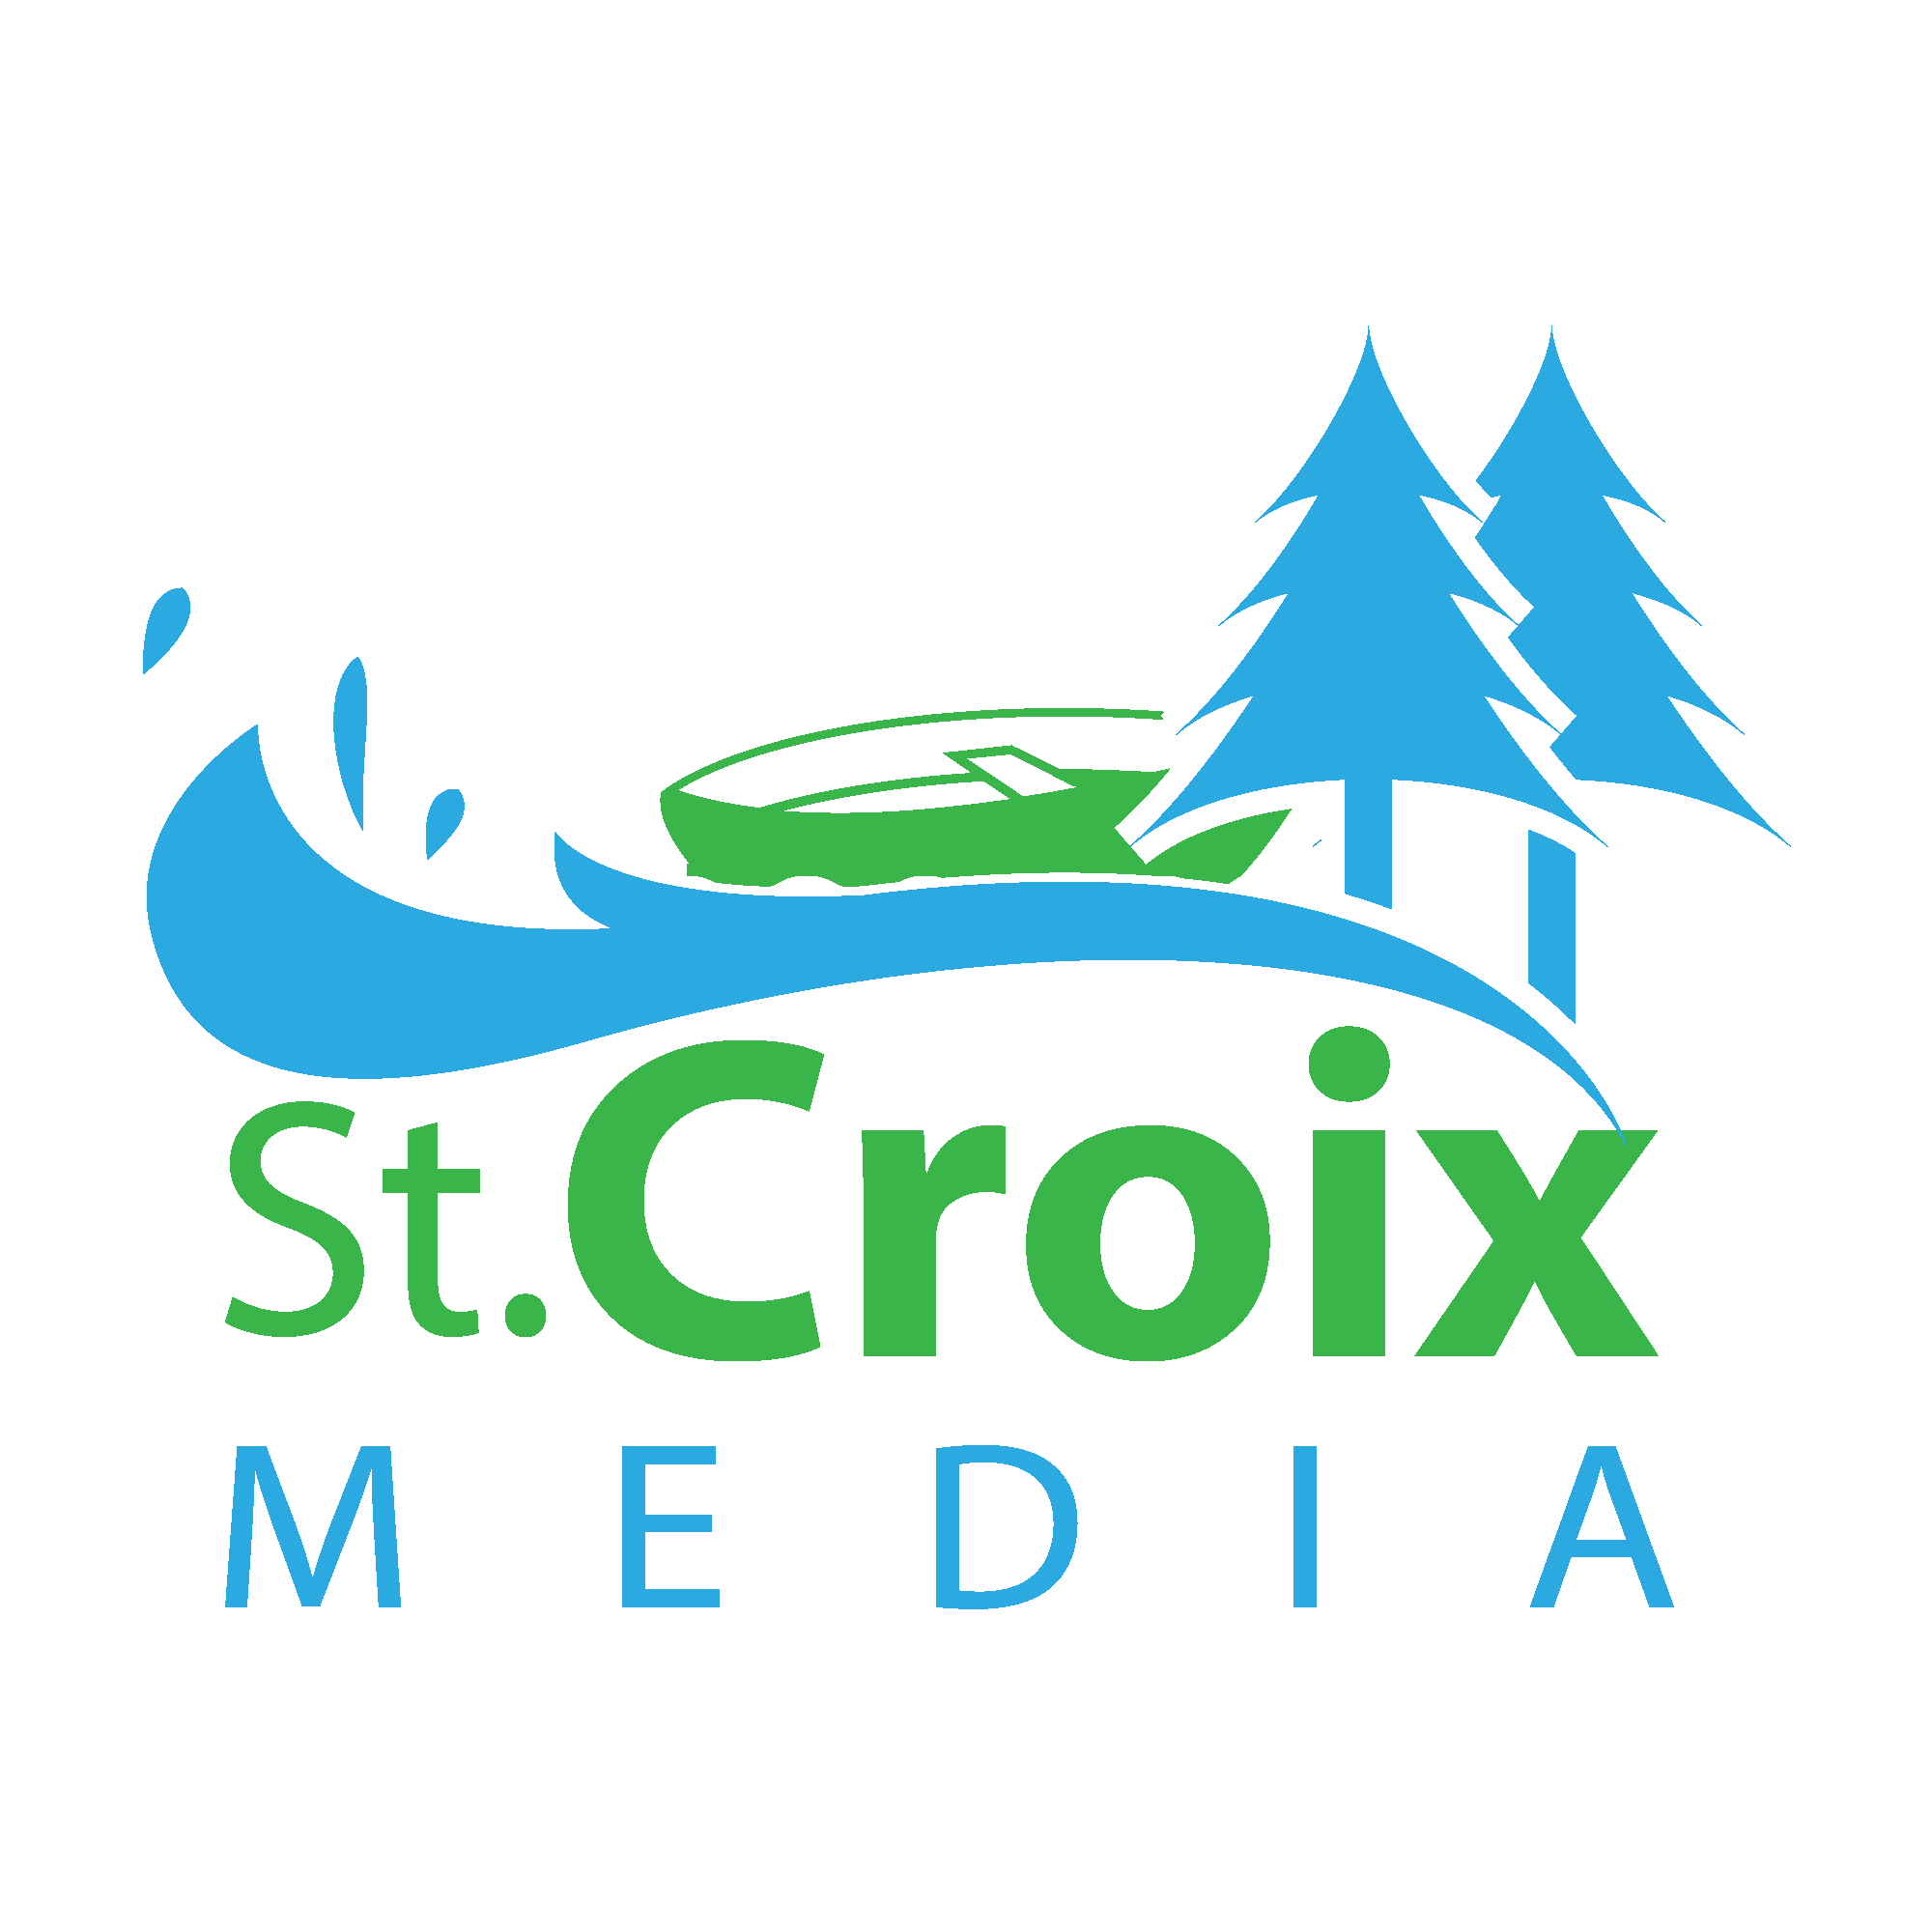 St. Croix Media